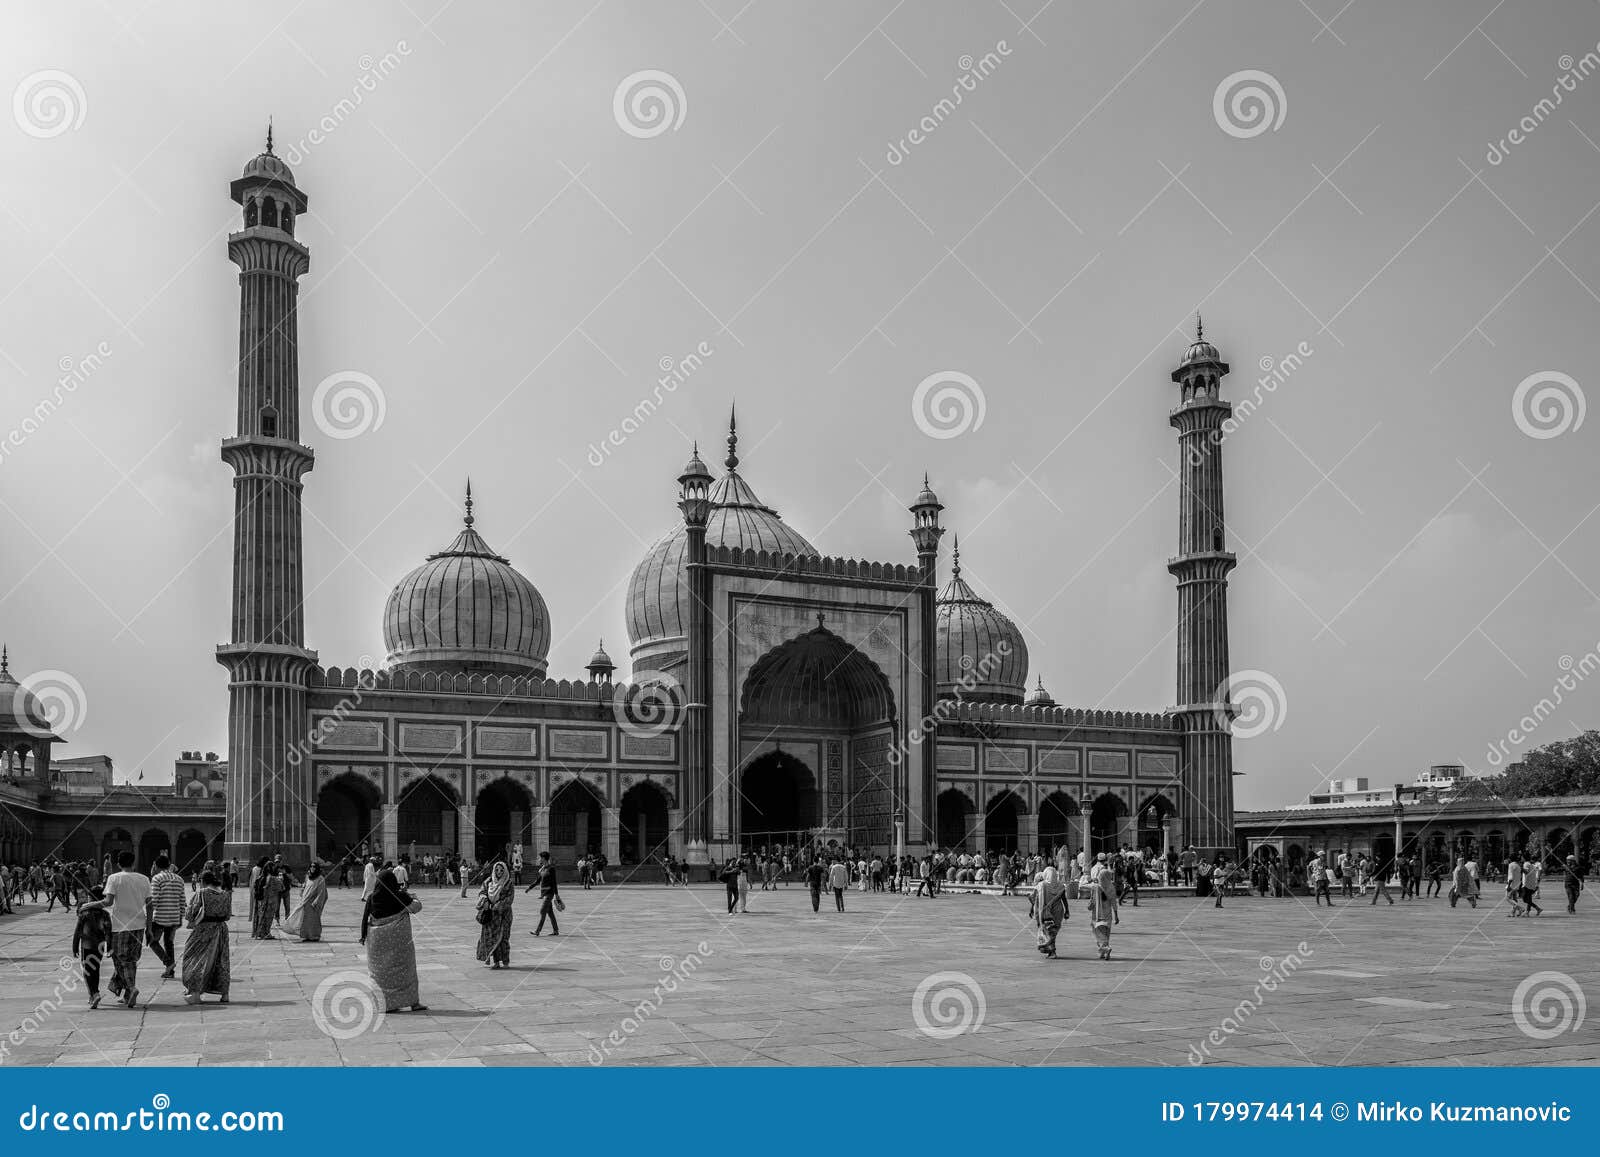 Jama Masjid Mosque In Old Delhi, India Editorial Stock ...